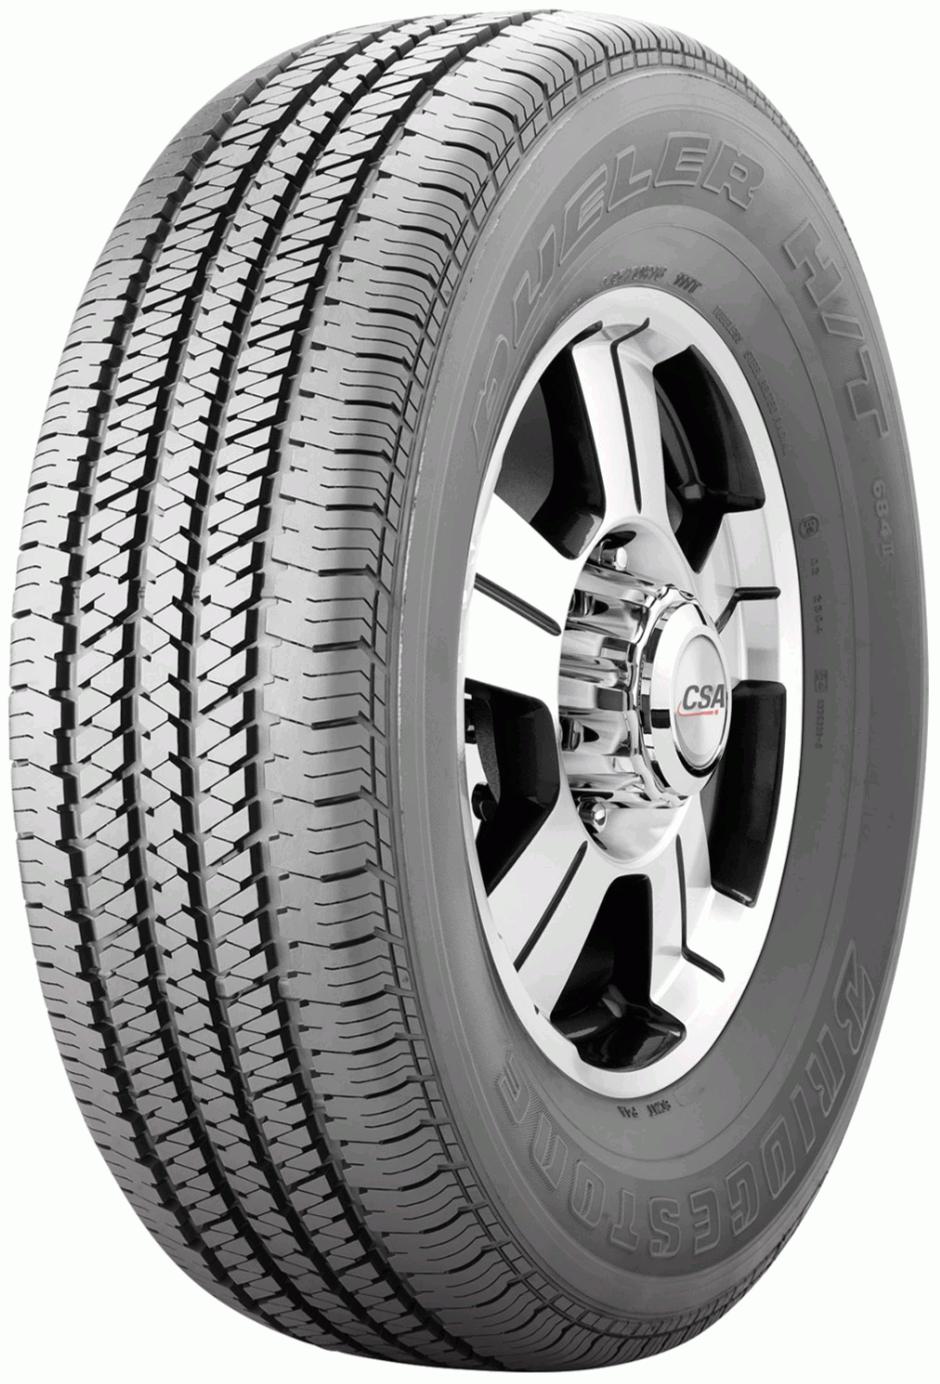 Bridgestone Dueler HT 684 - Tyre Reviews and Tests